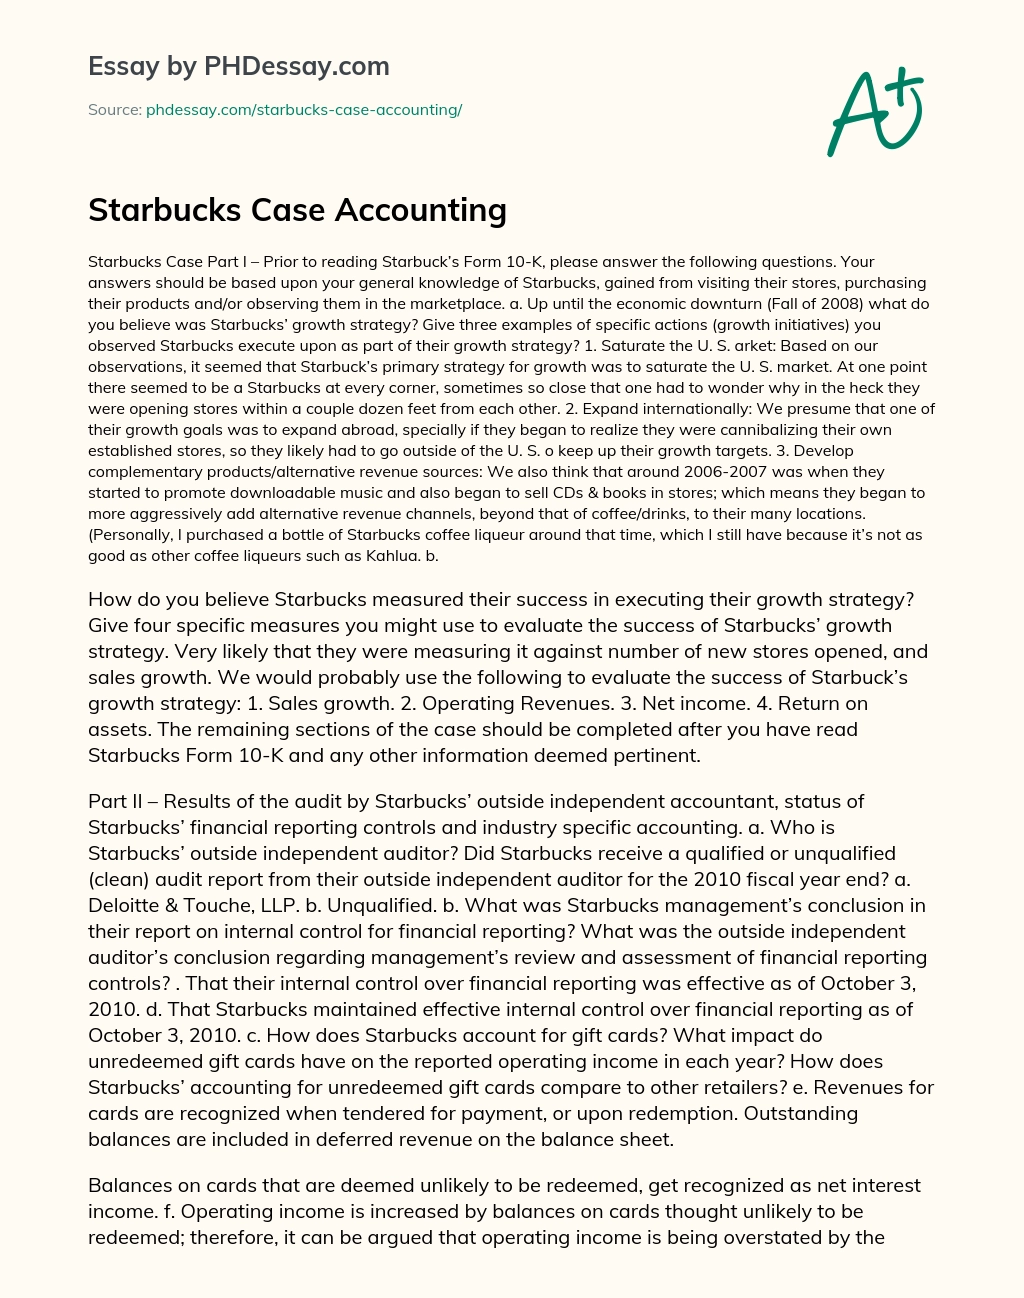 Starbucks Case Accounting essay